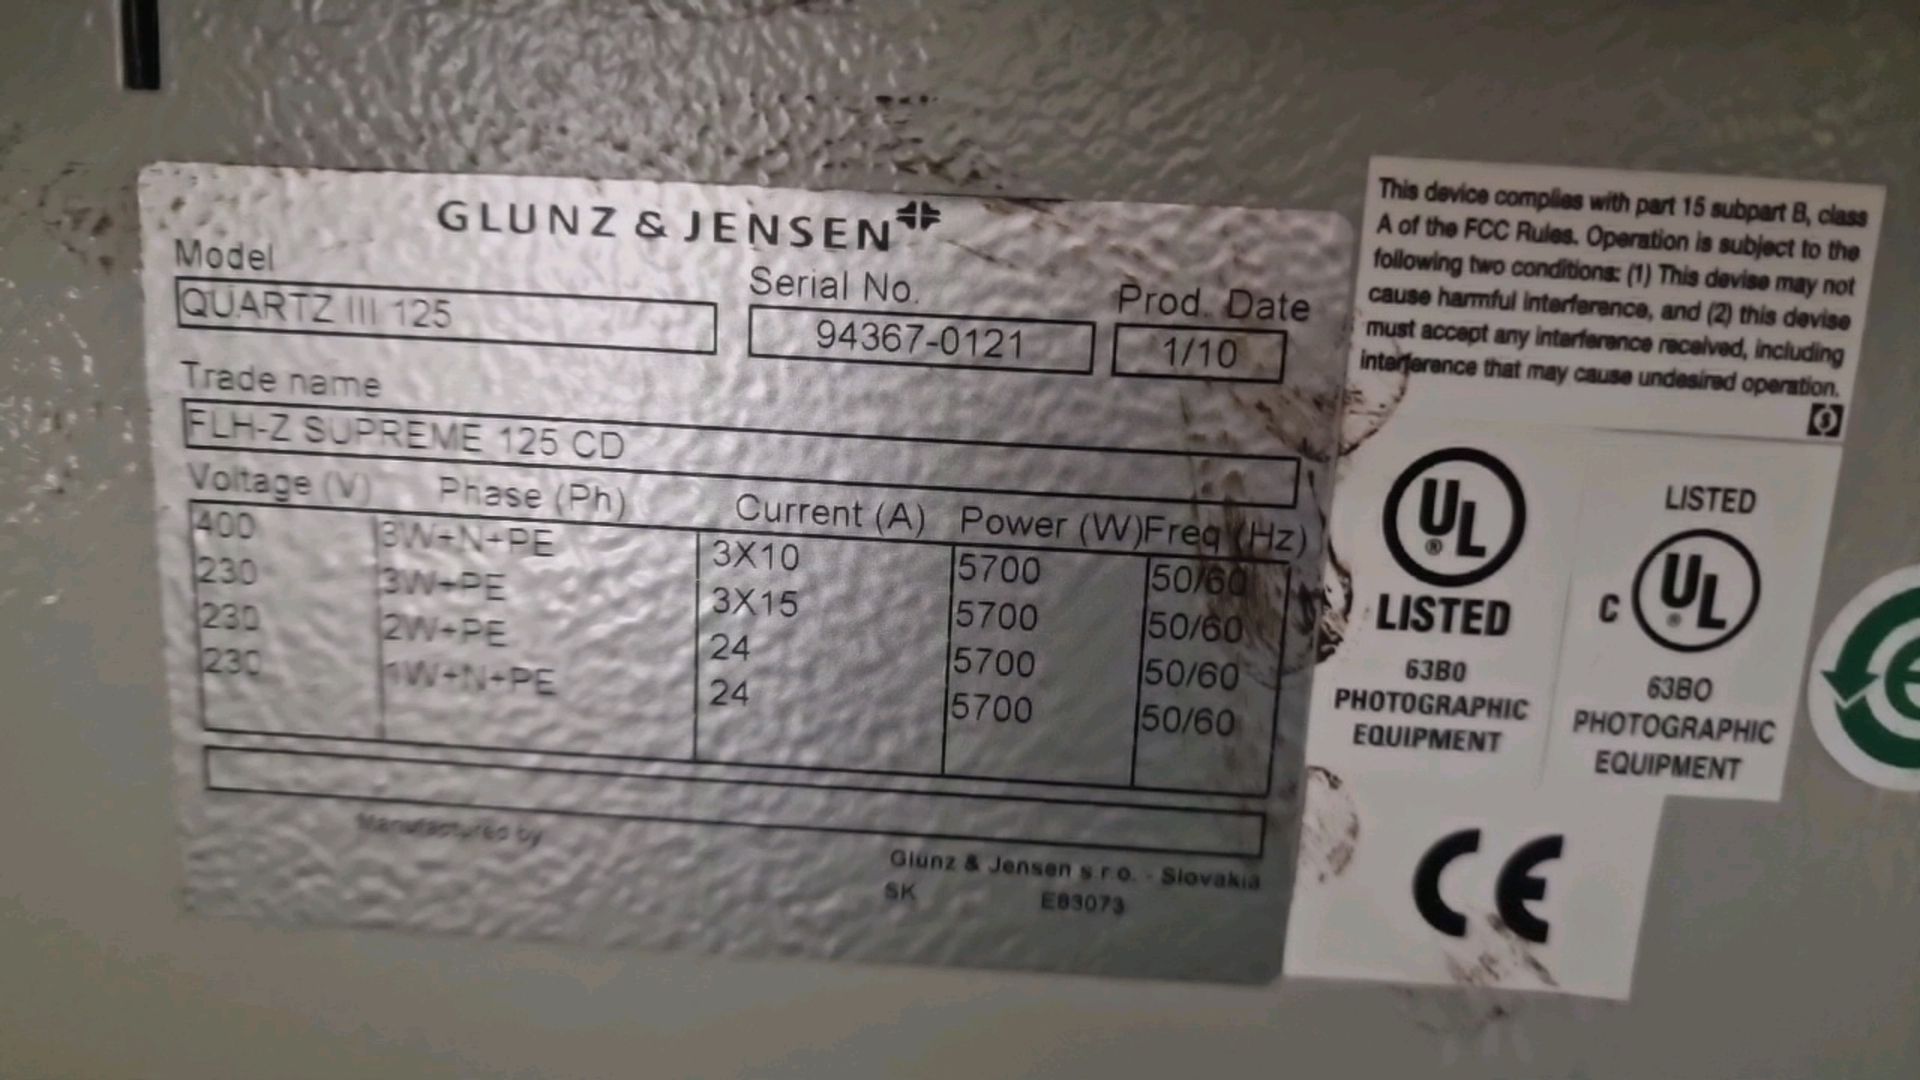 2010 Glunz & Jensen Quartz 111 125 Thermal Plate Processer - Image 4 of 9